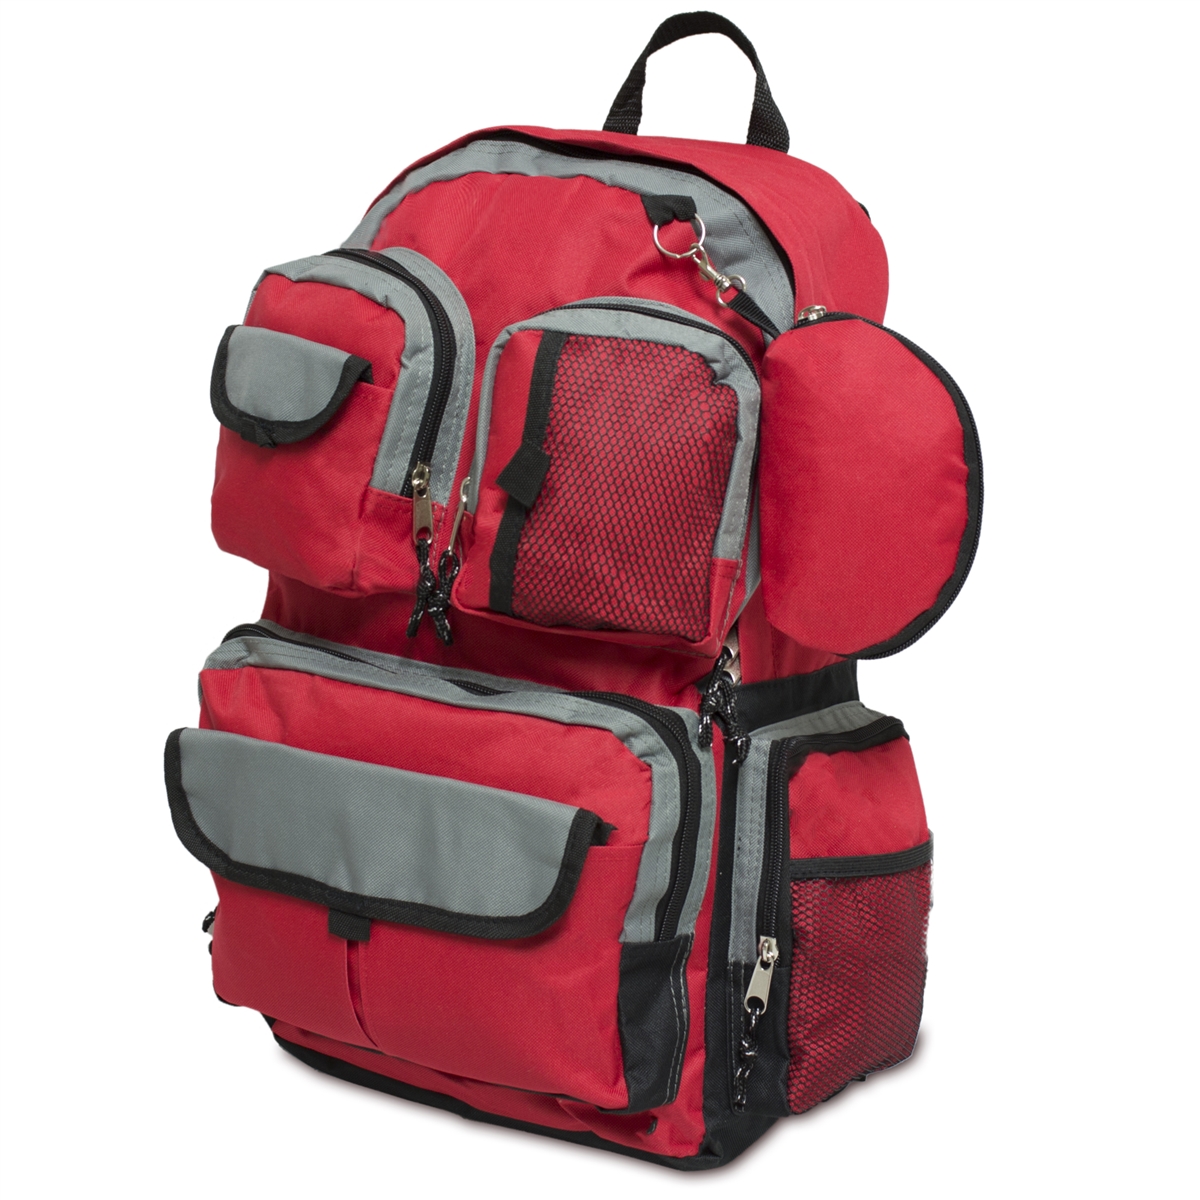 712r Emergency Red Backpack